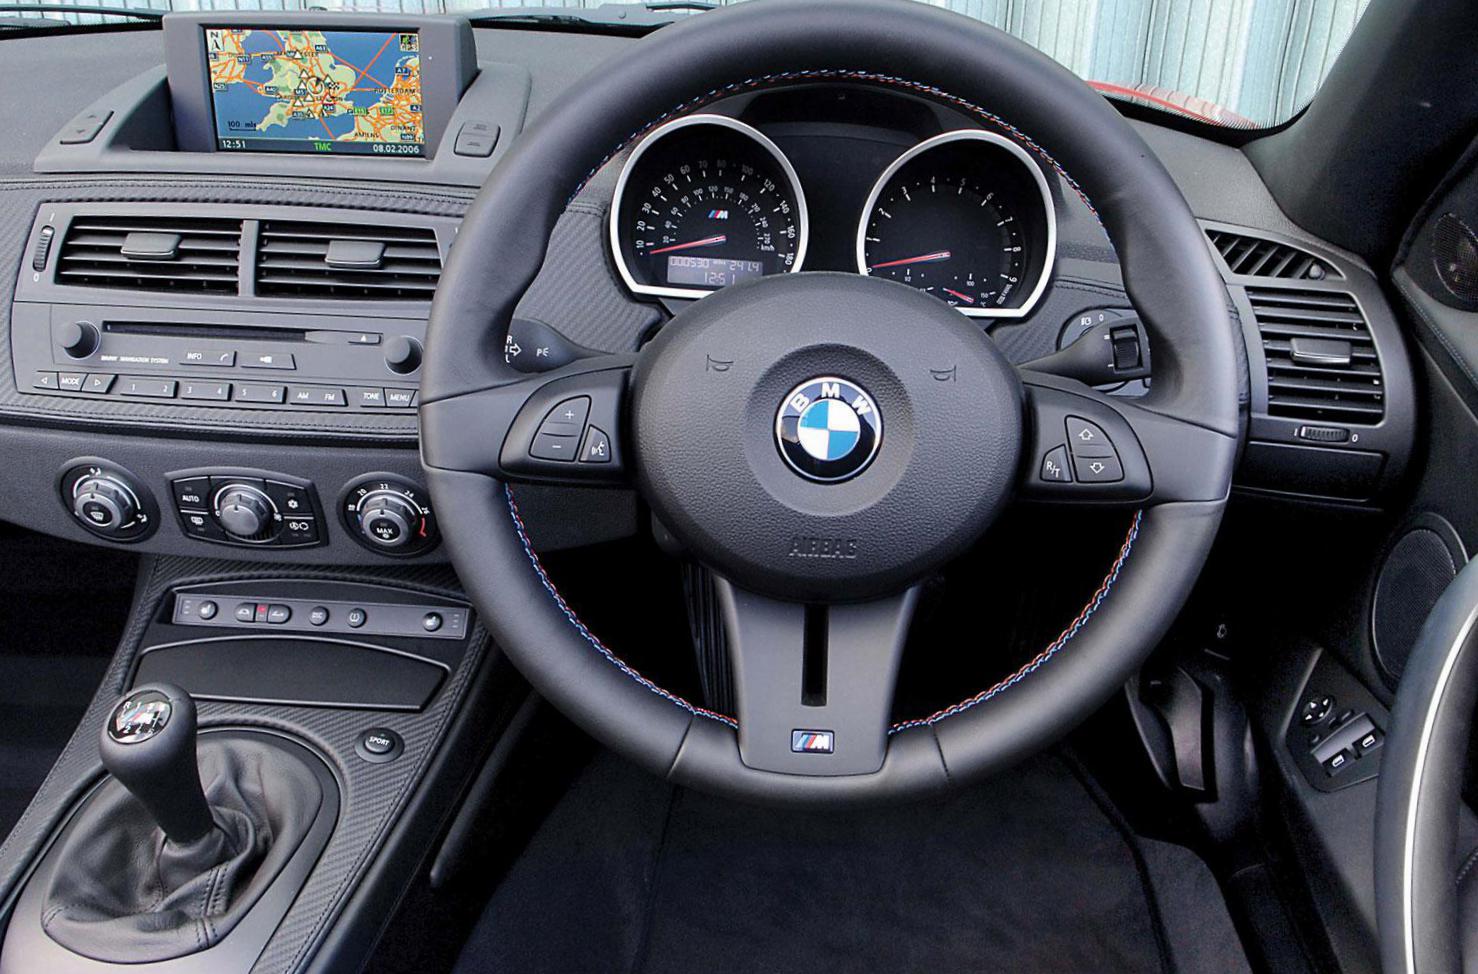 Z4 Coupe (E85) BMW specs suv